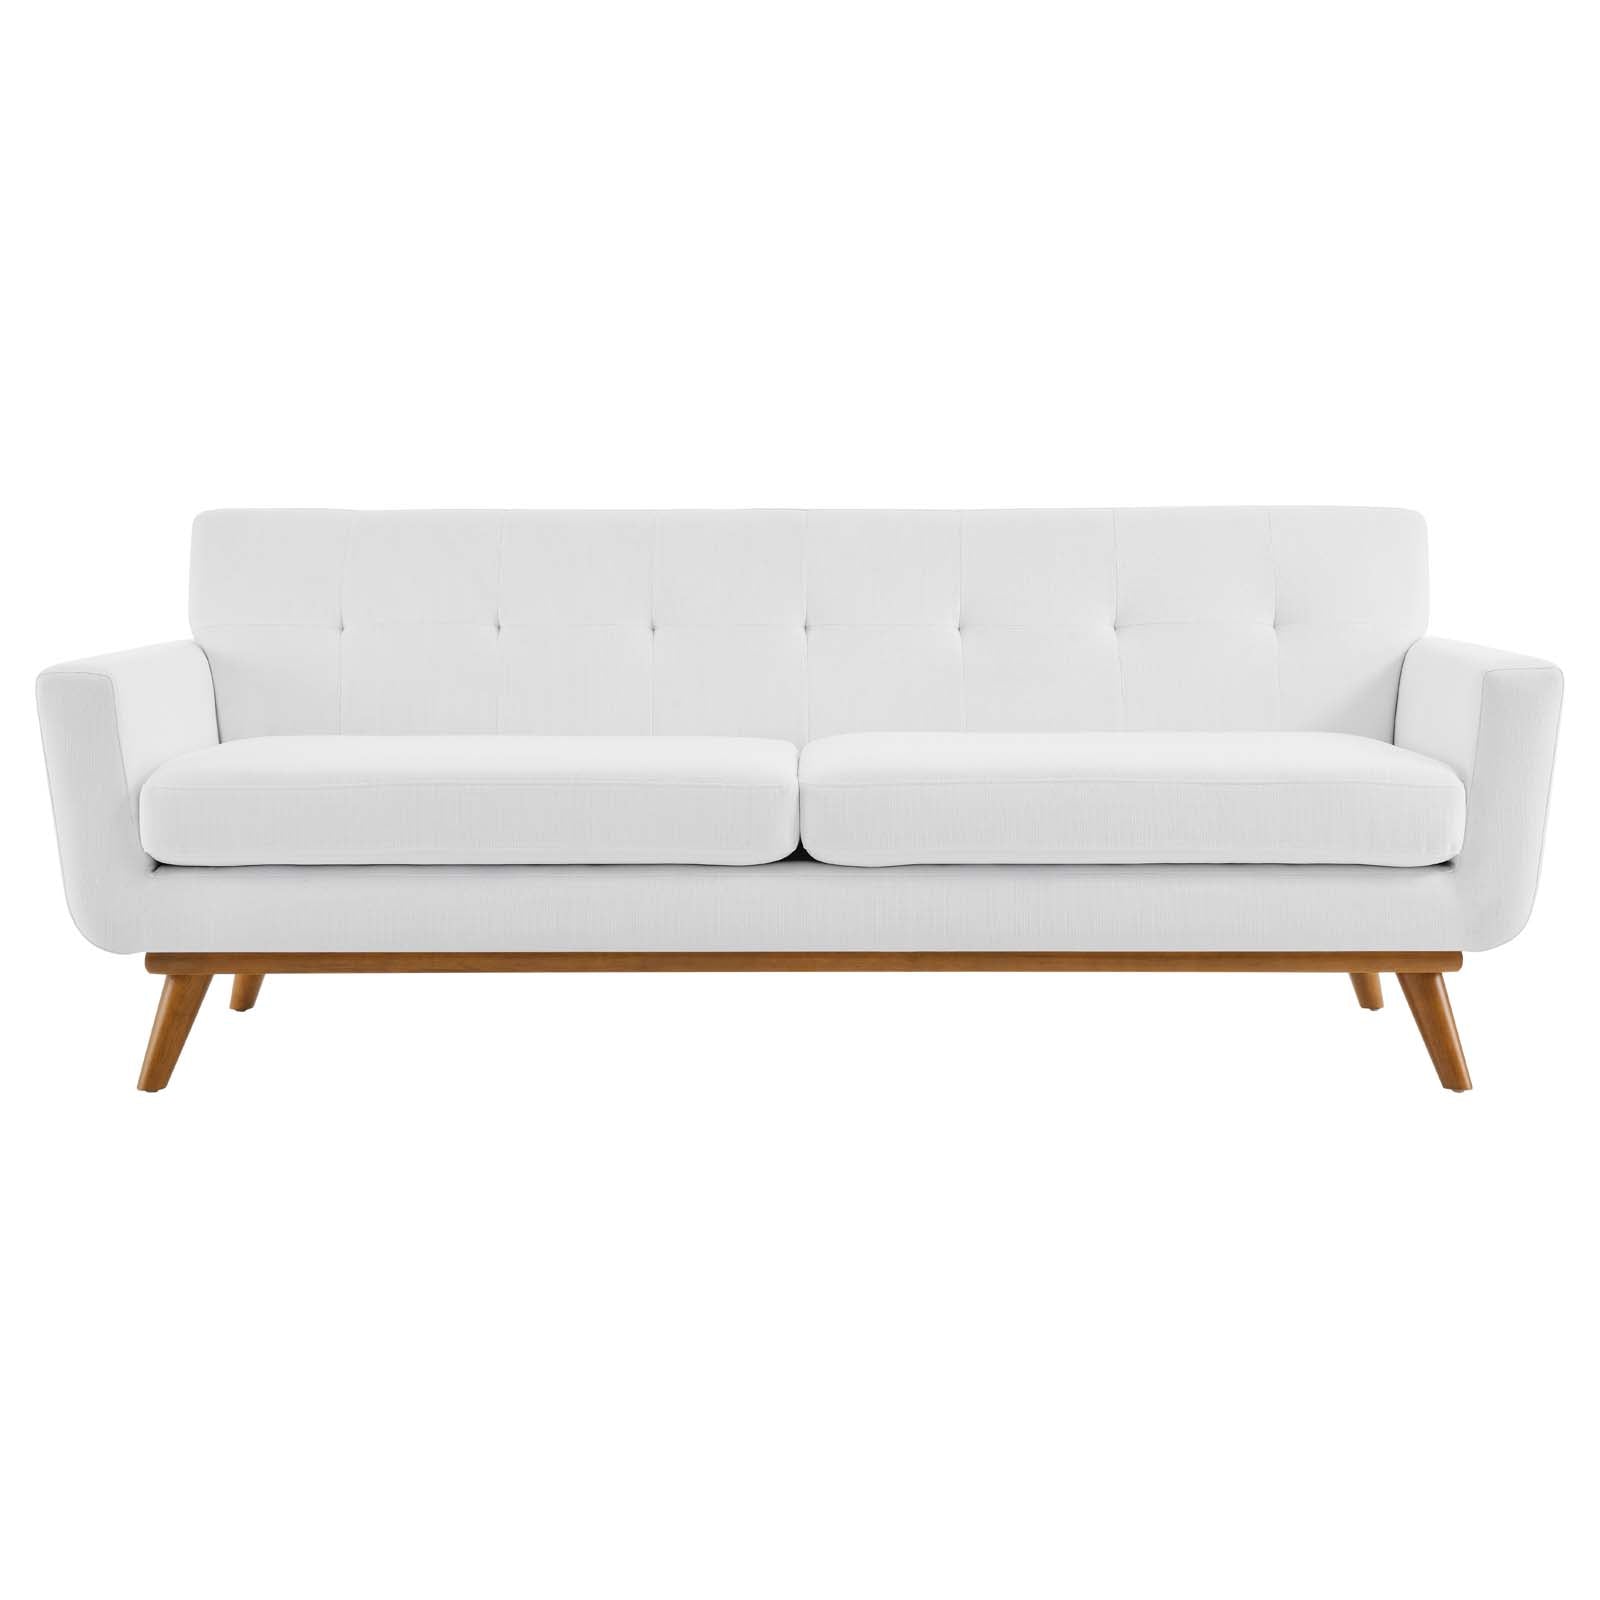 Engage Upholstered Fabric Sofa - East Shore Modern Home Furnishings